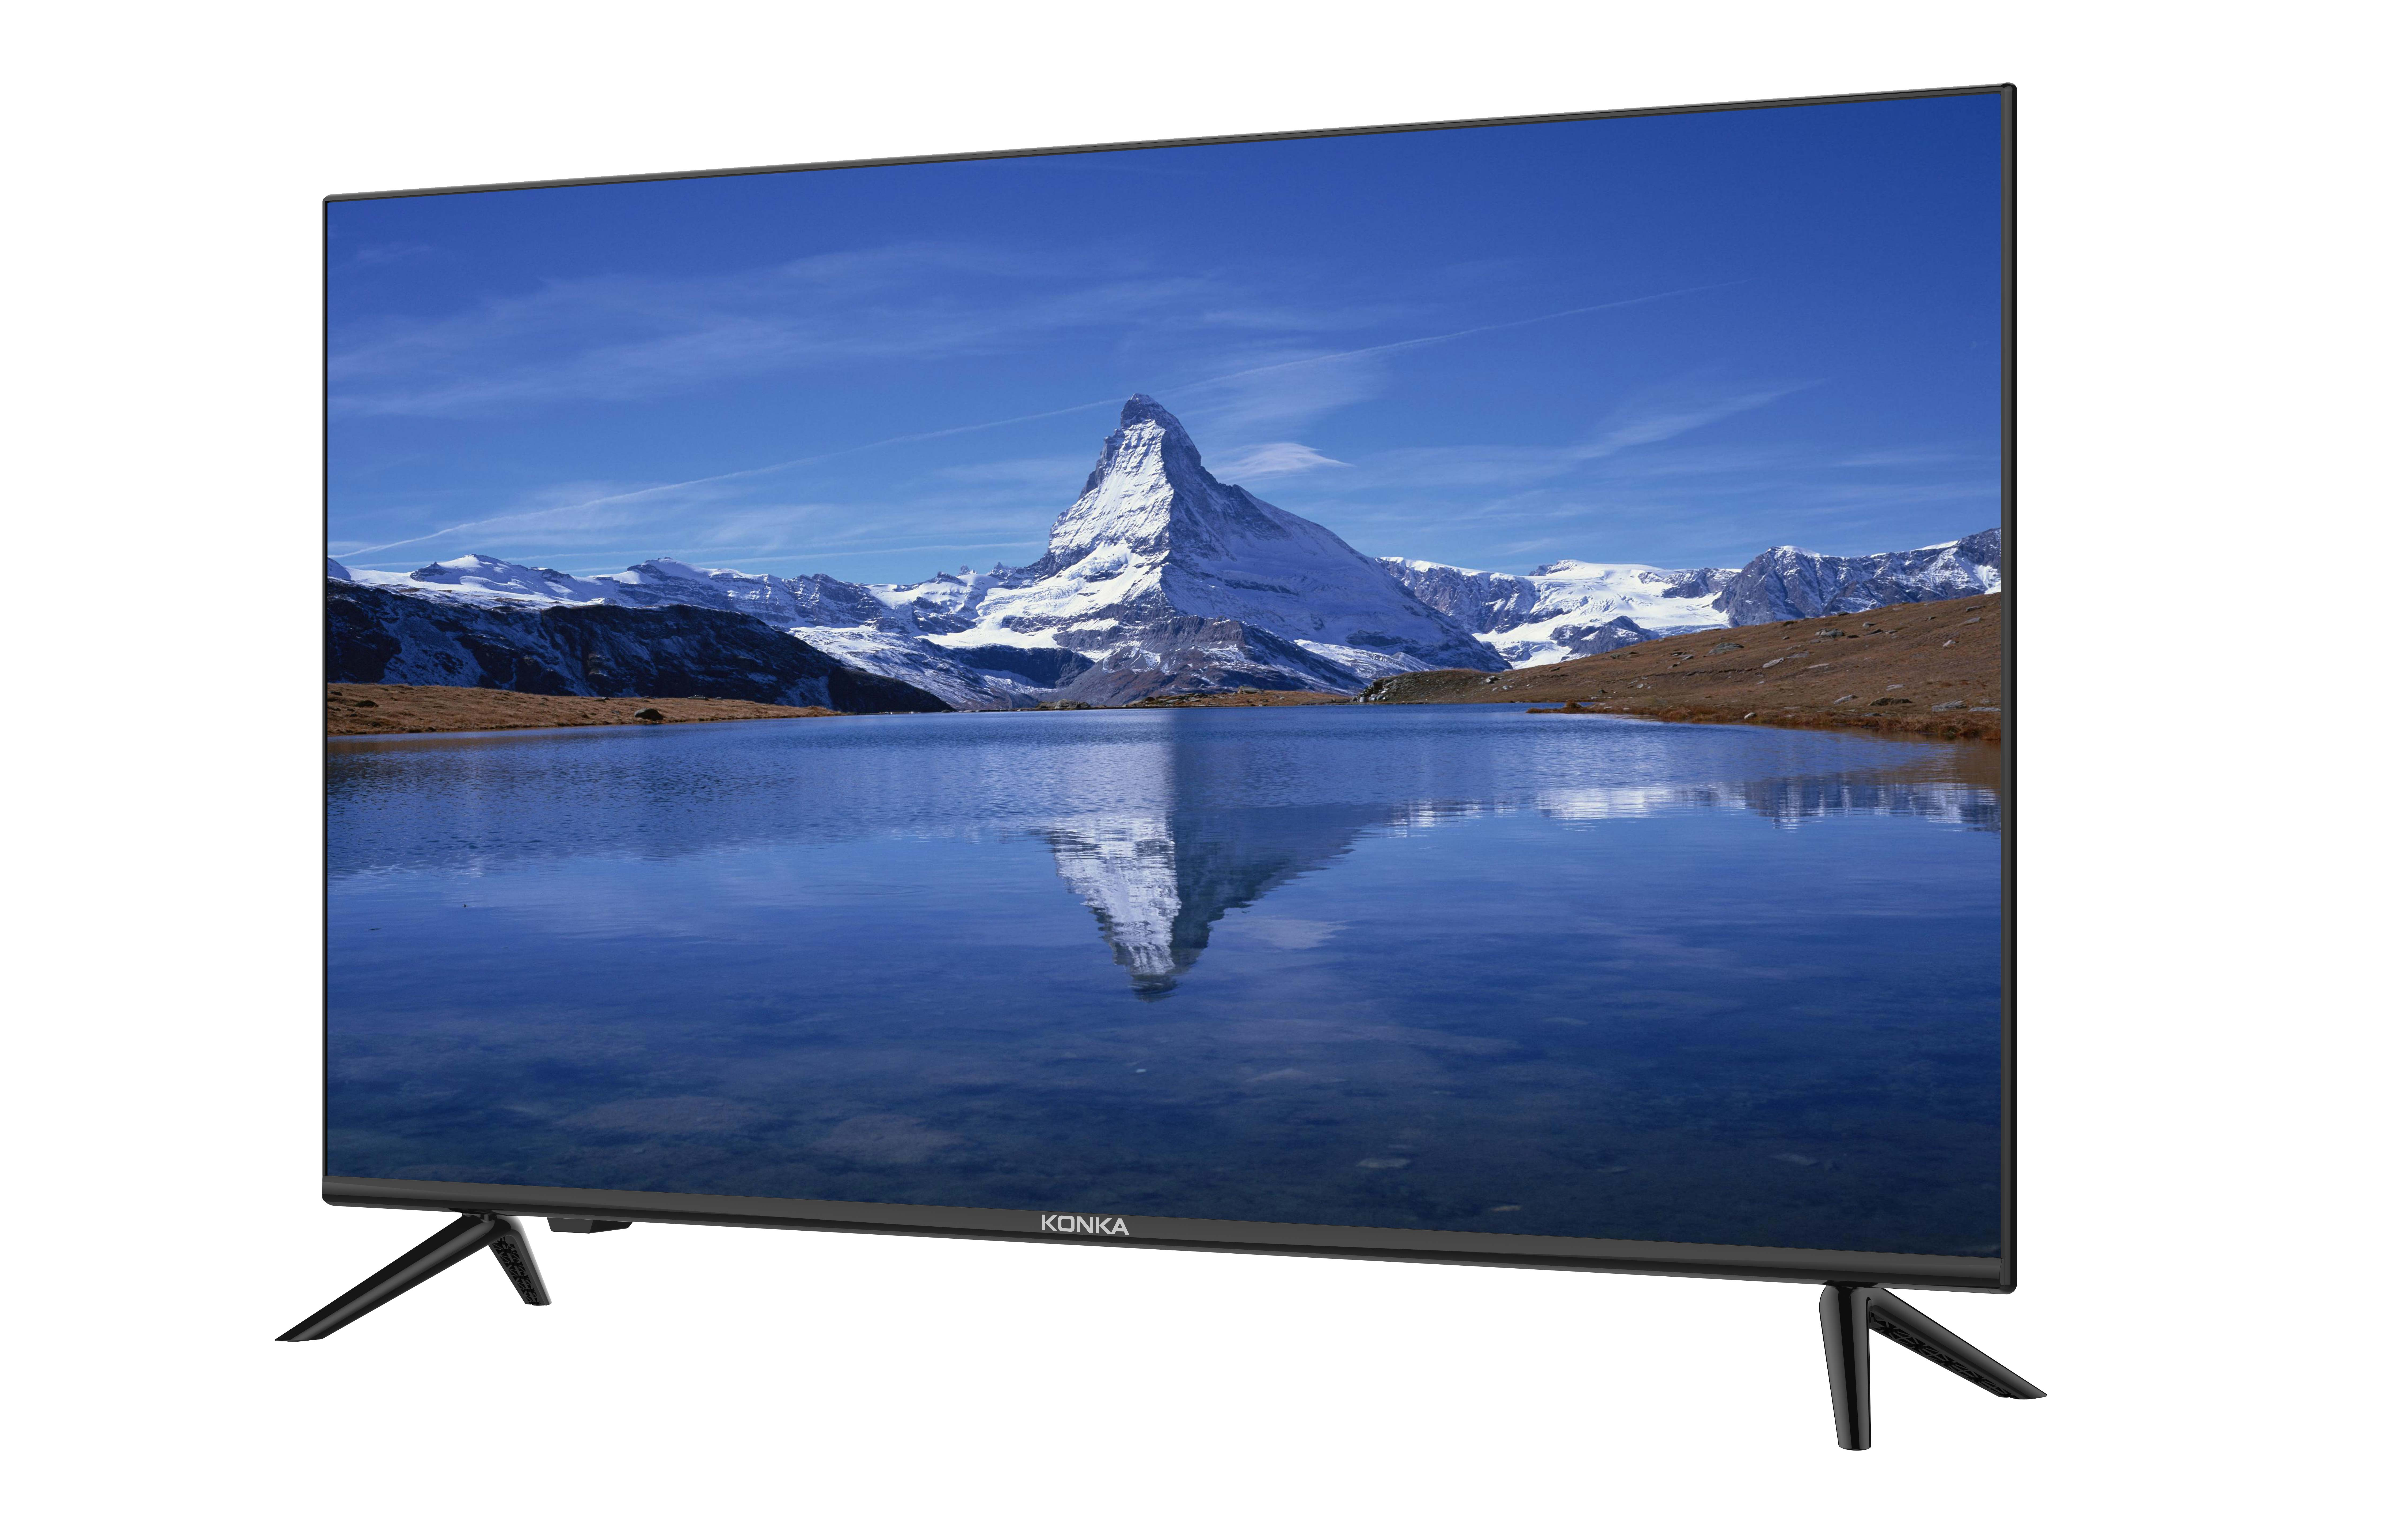 Konka H3 series Smart TV - 40-inch 1080p.jpg